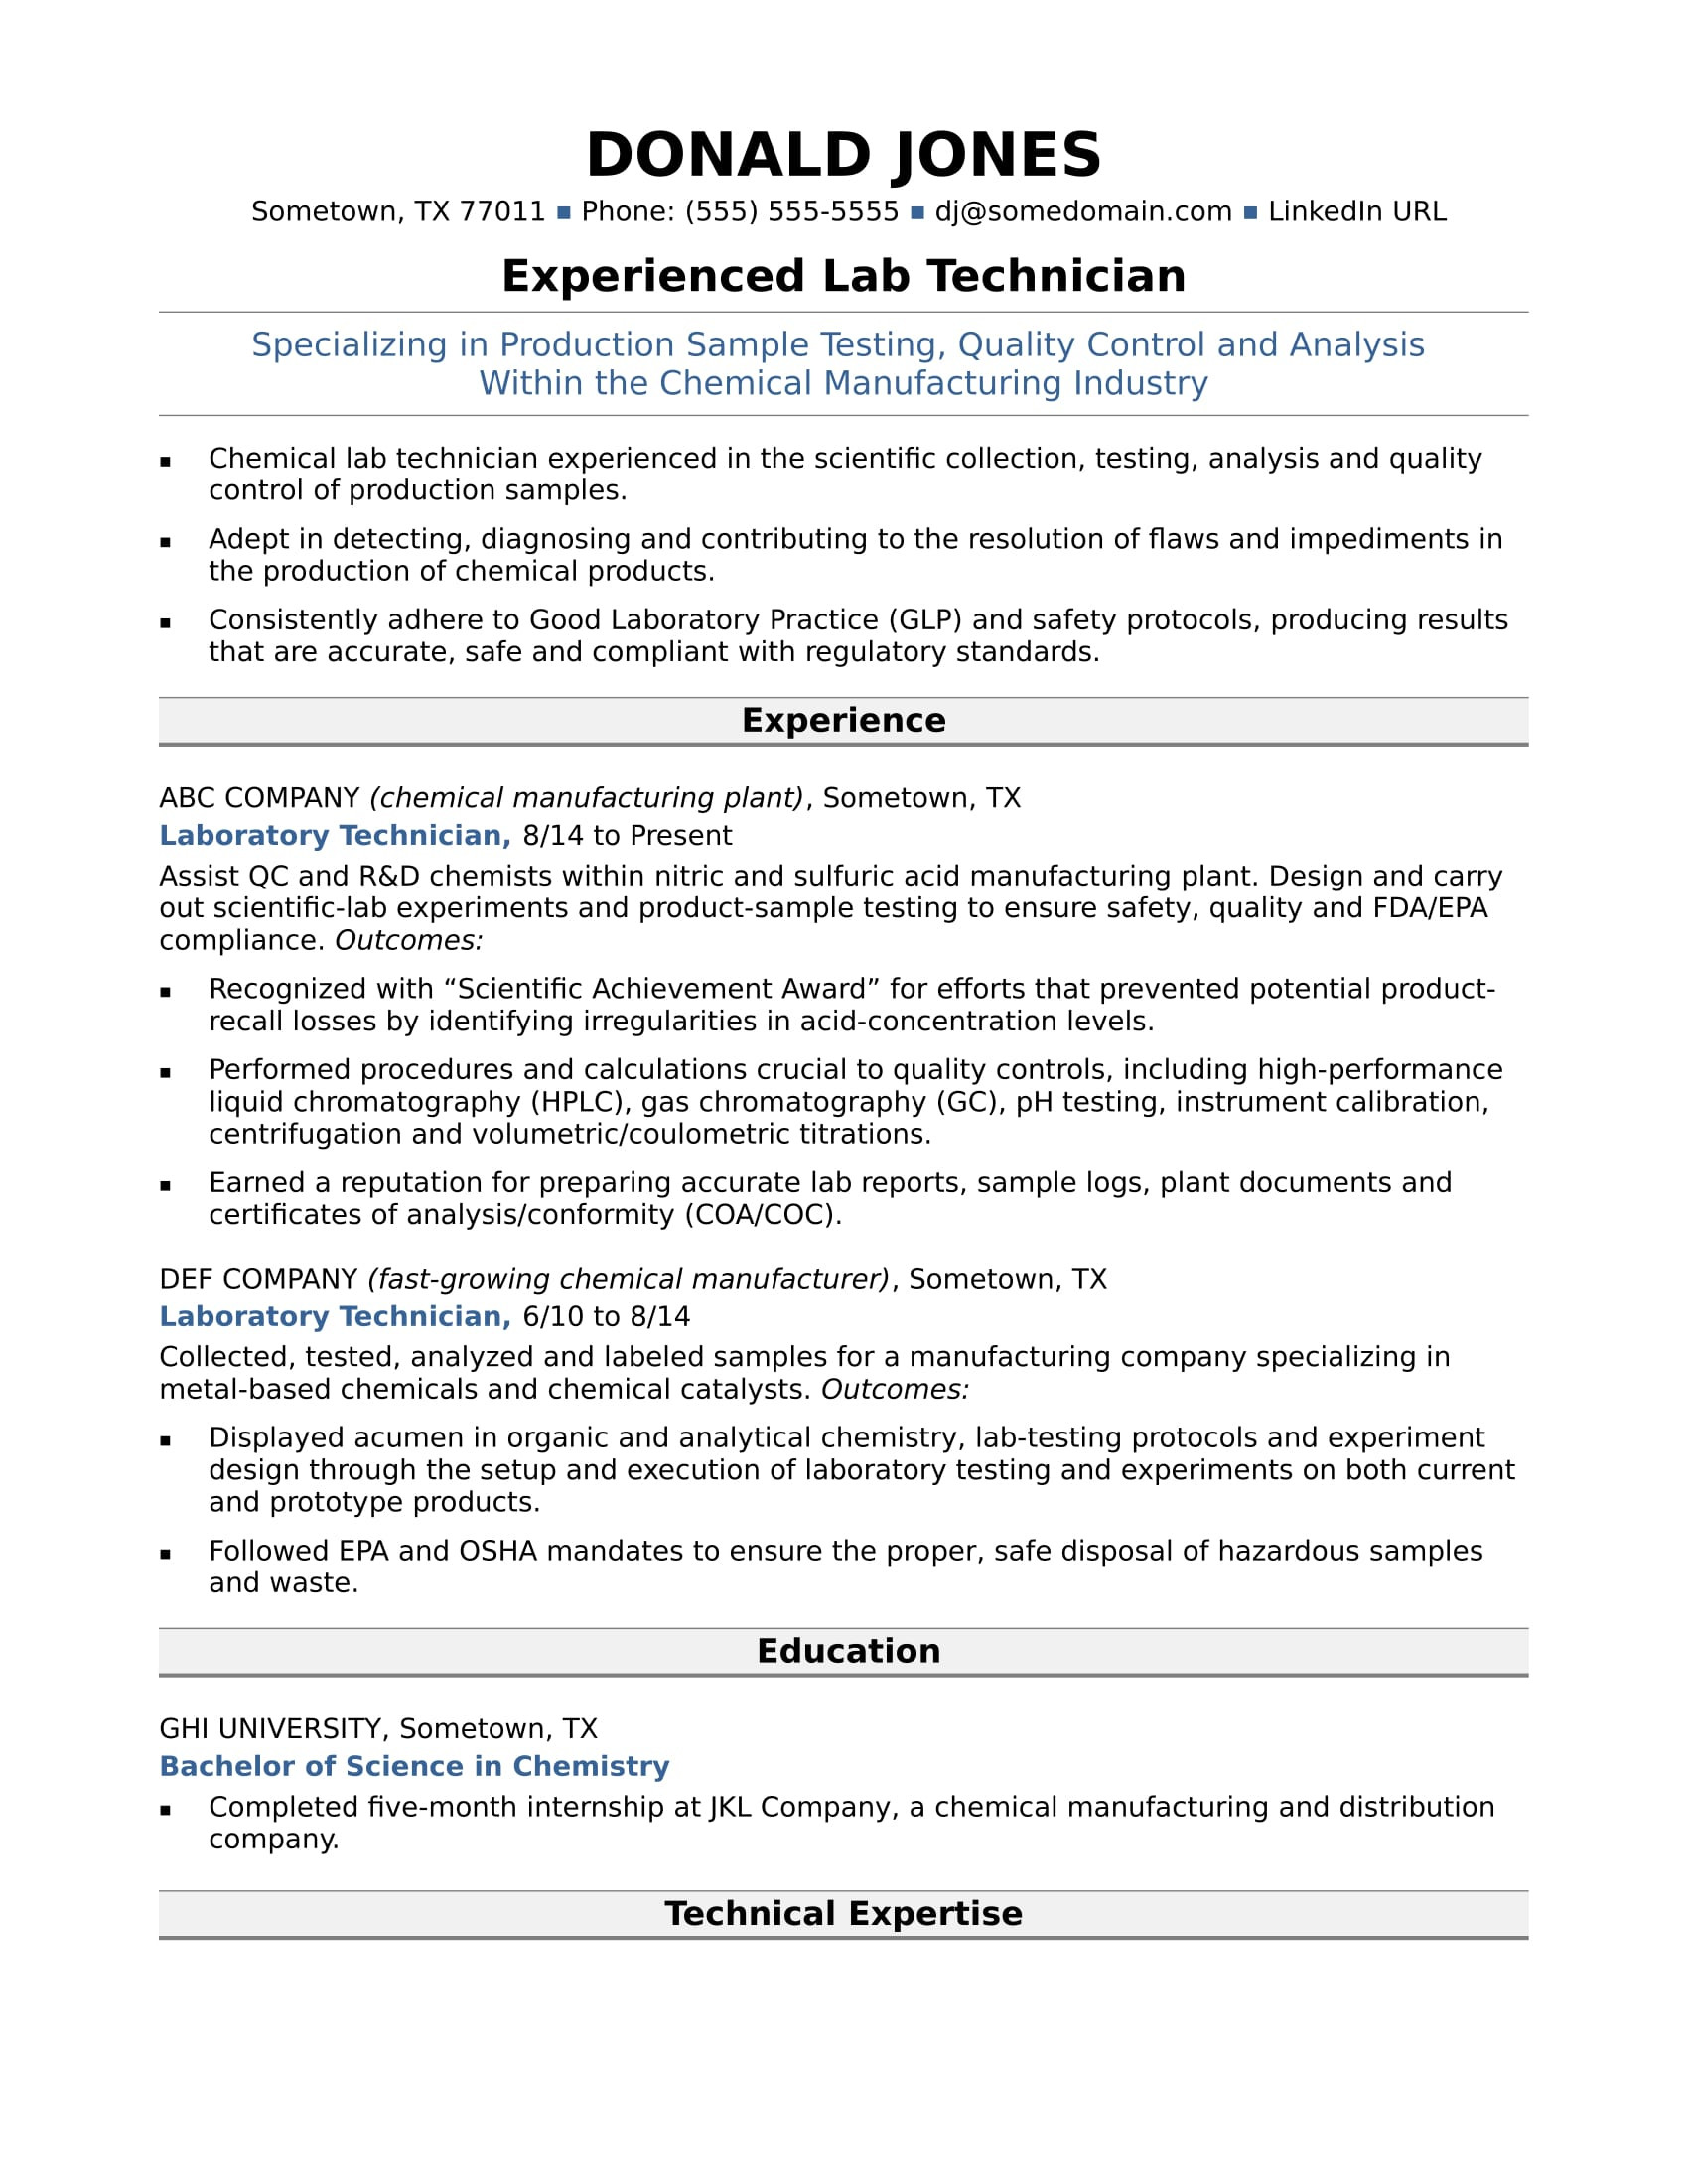 Sample Resume Of Health Technician Laboratory Senior Laboratory Technician Resume Sample Monster.com